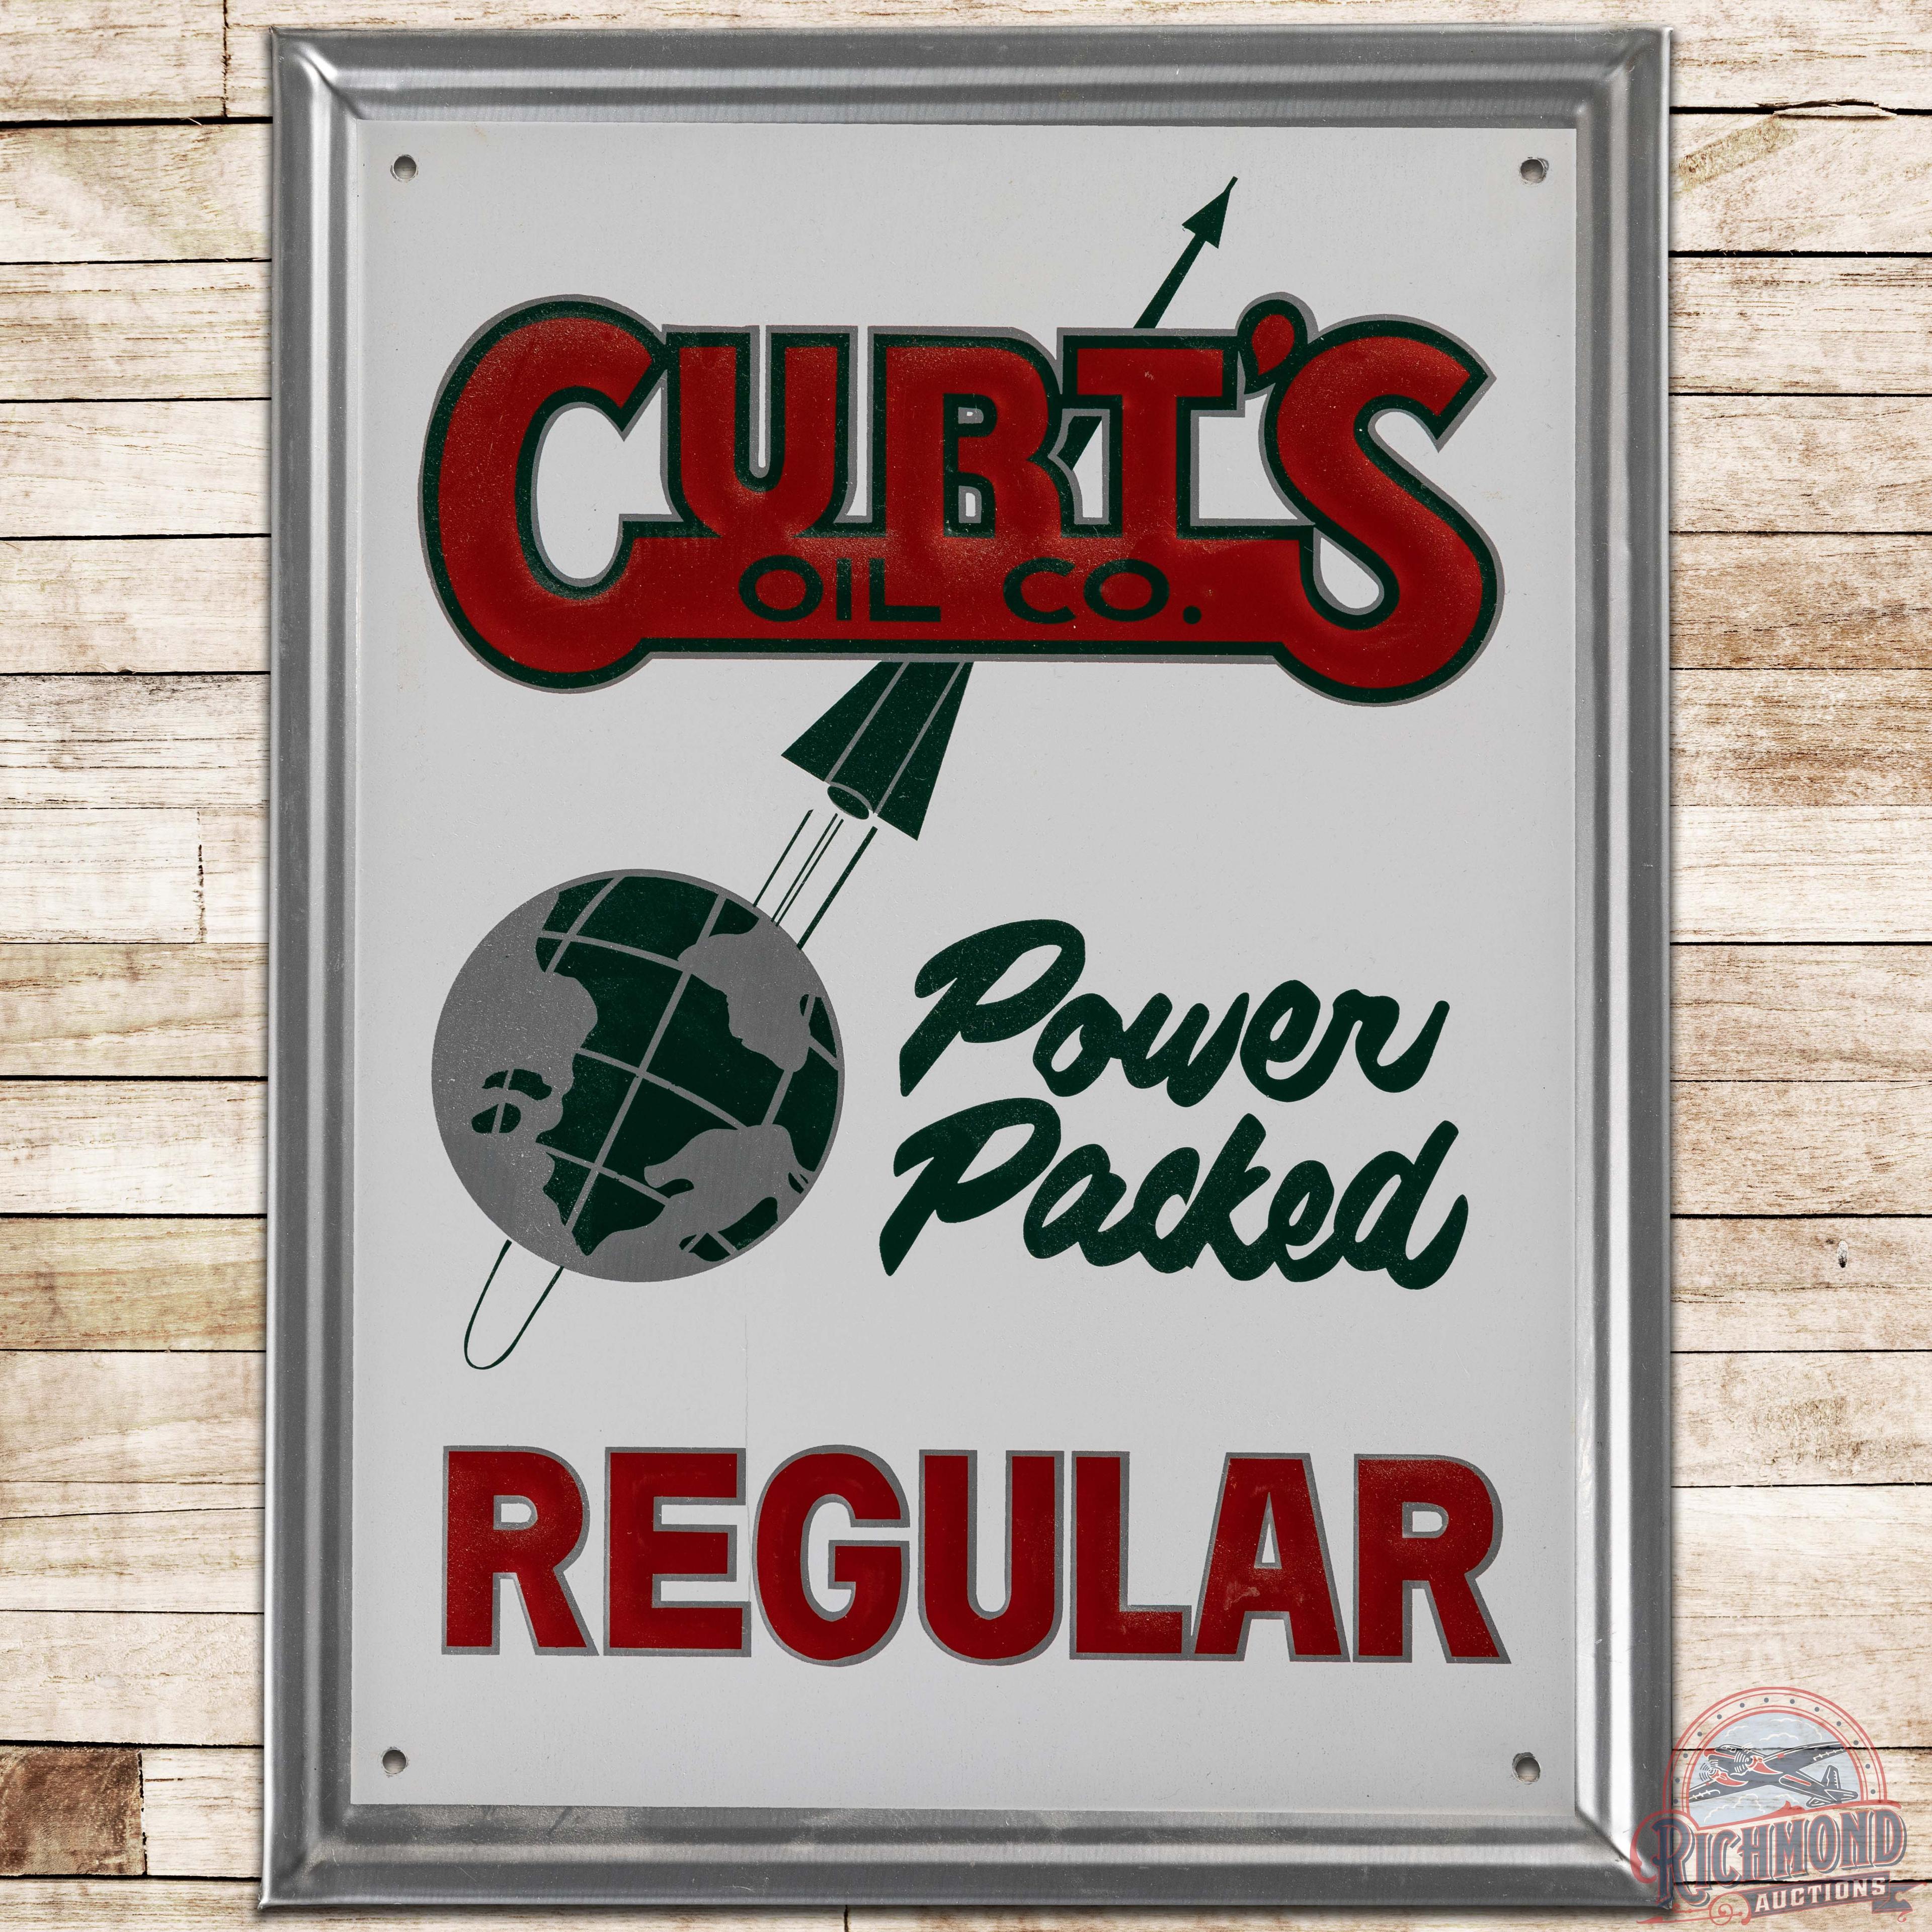 NOS Curt's Oil Co Power Packed Regular Emb. SS Tin Pump Plate Sign